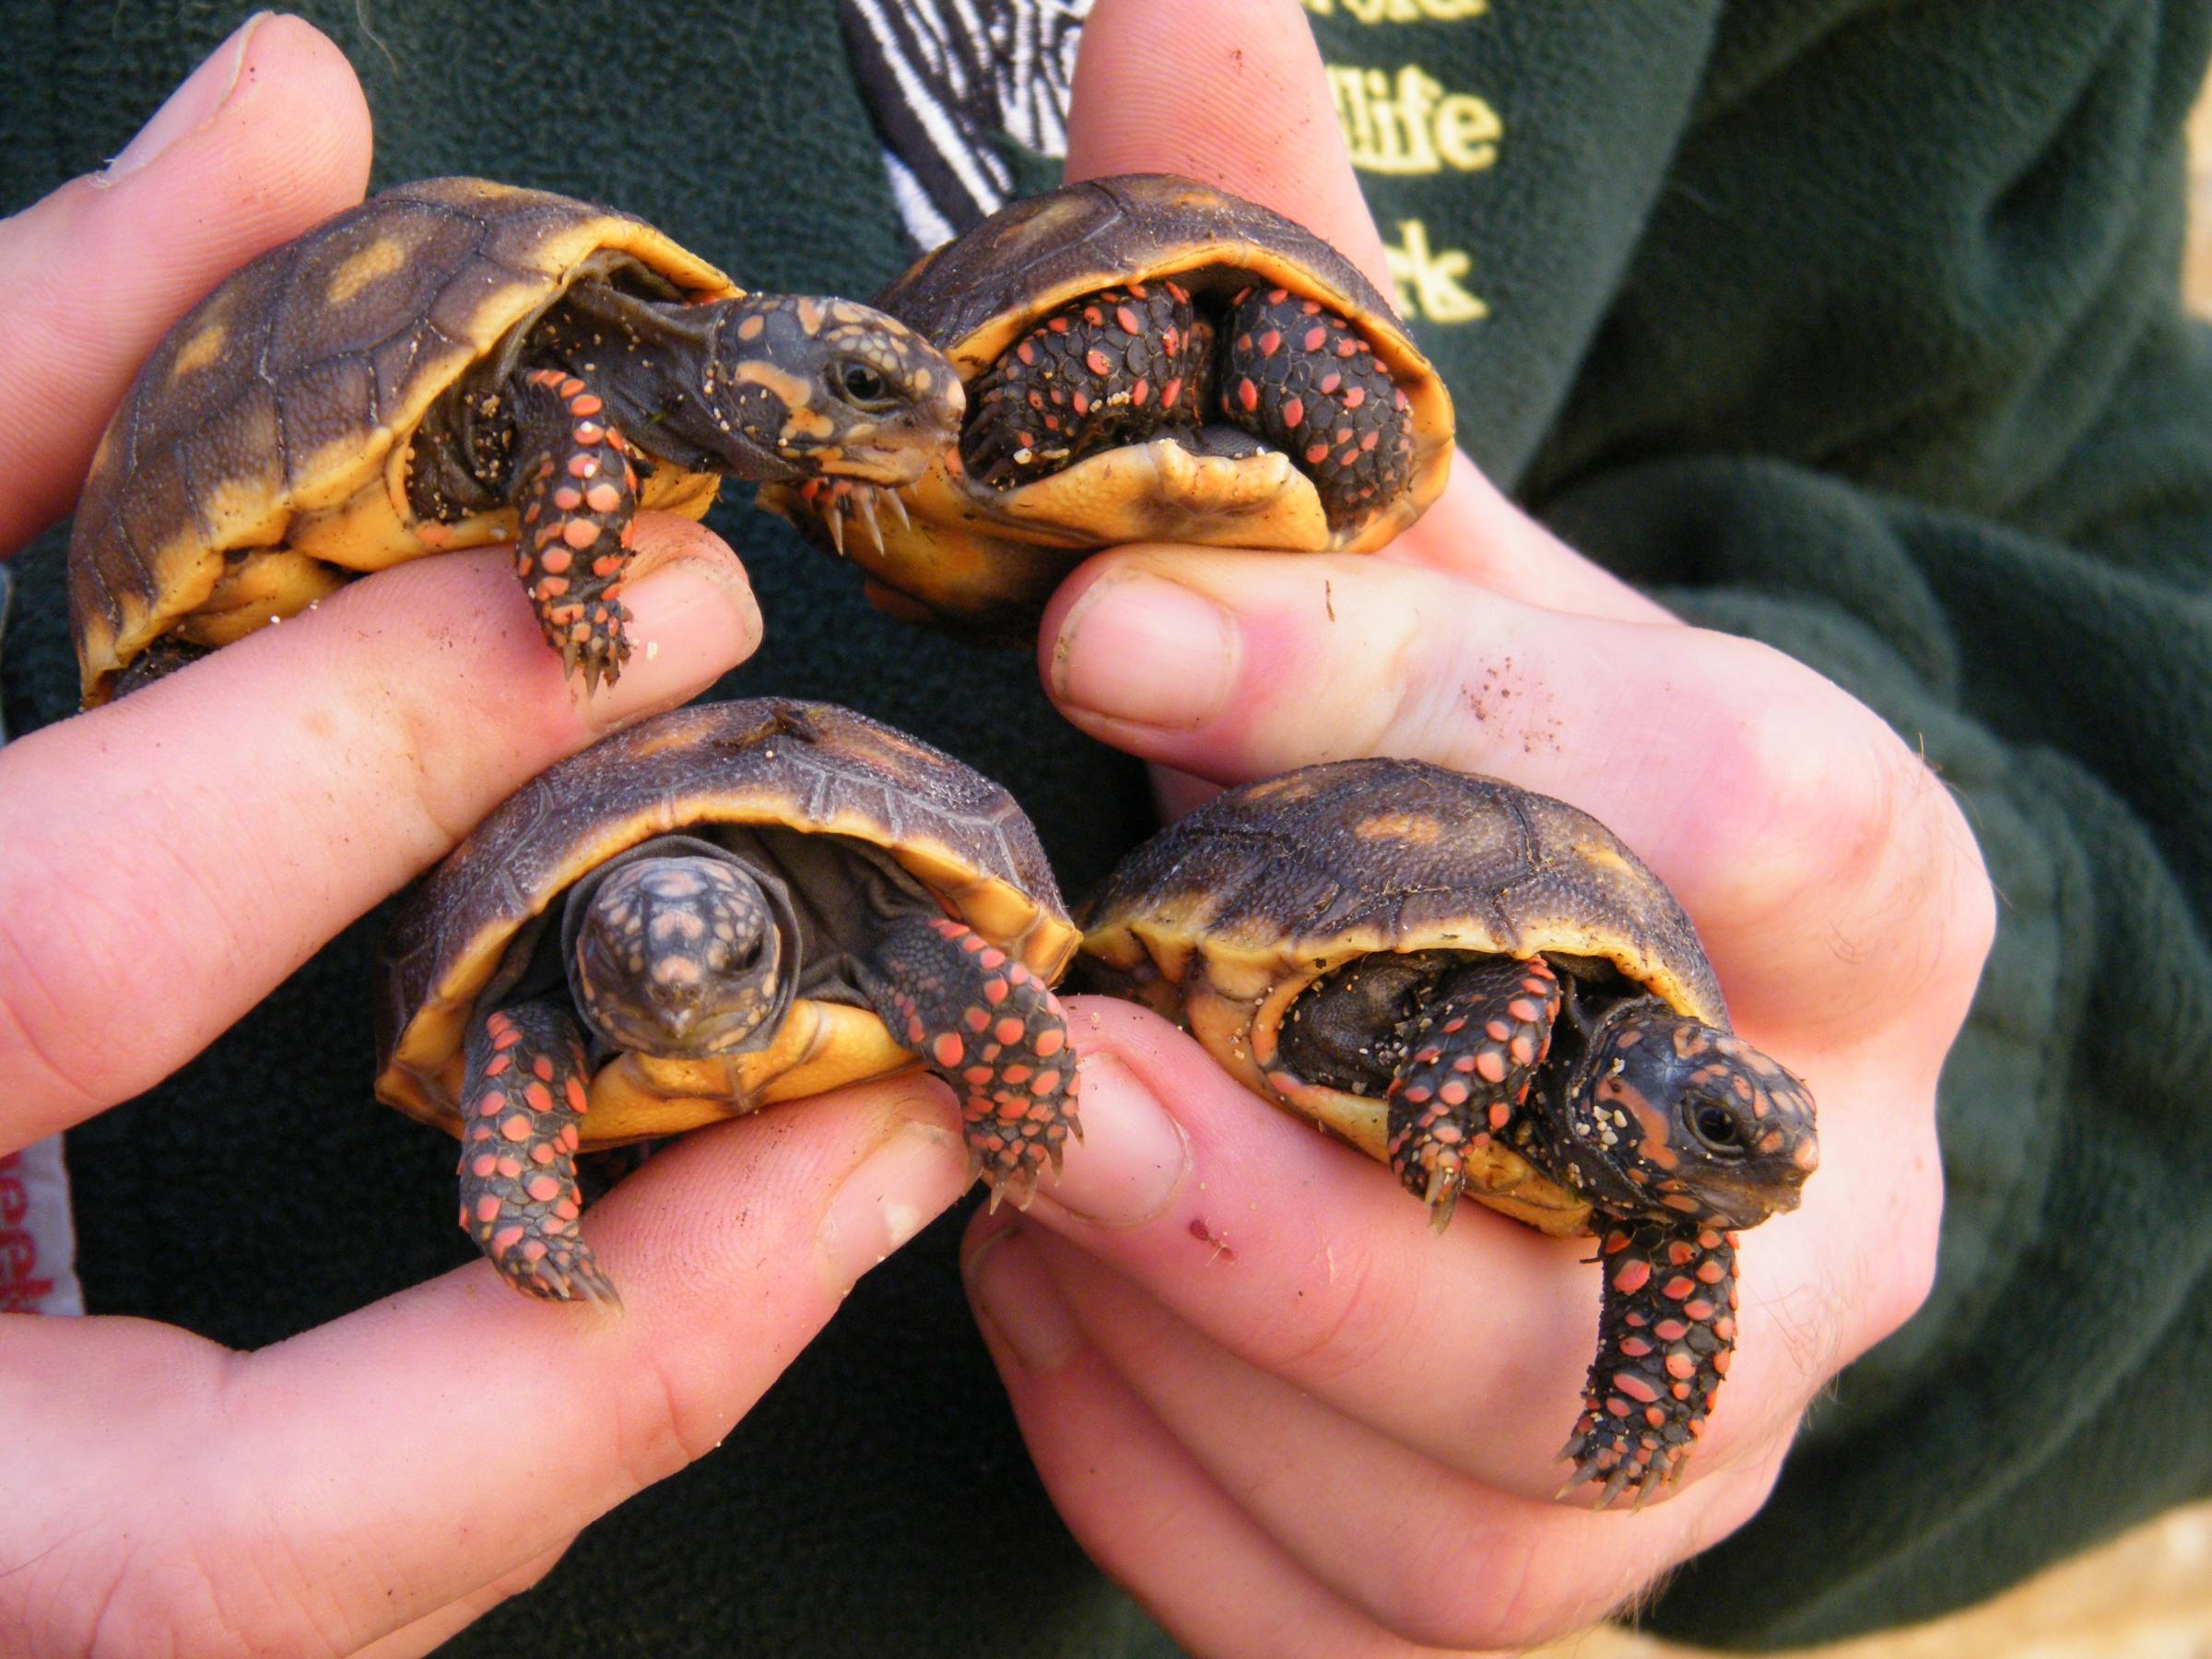 Baby Tortoises Spring A Surprise At Wildlife Park Swindon Advertiser